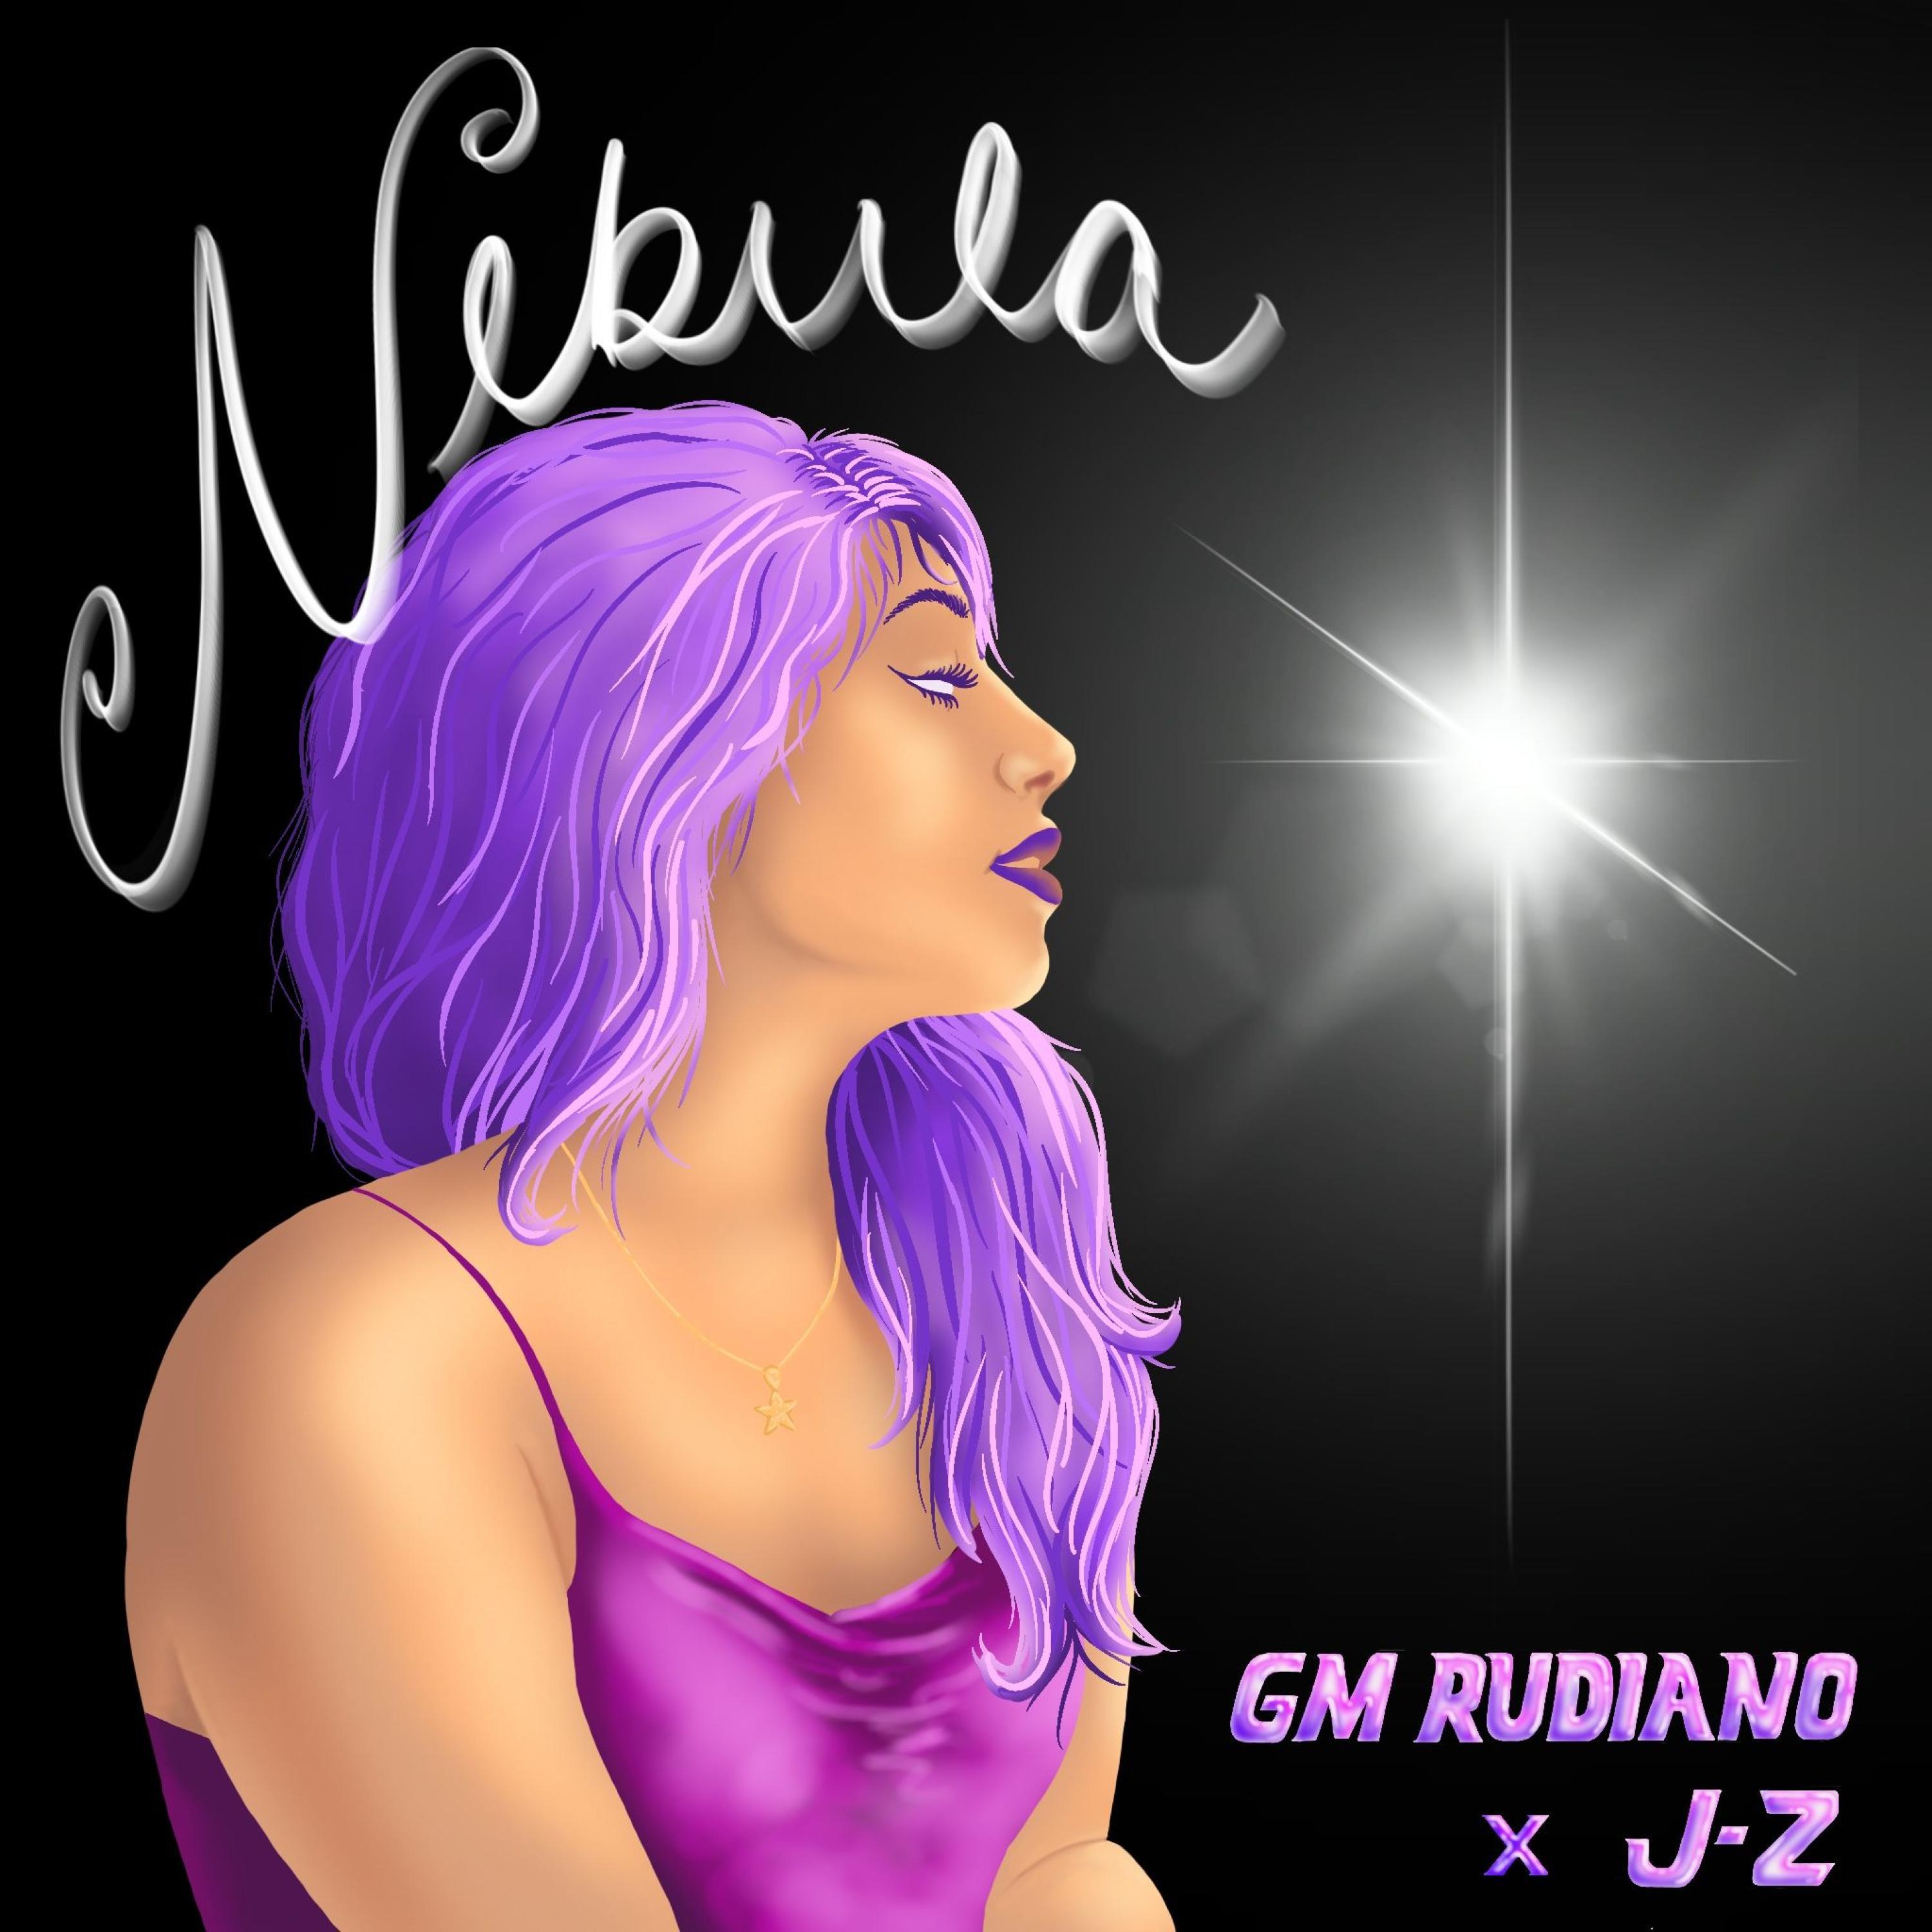 GM Rudiano - NEBULA (feat. J-Z La Melodia Musical)